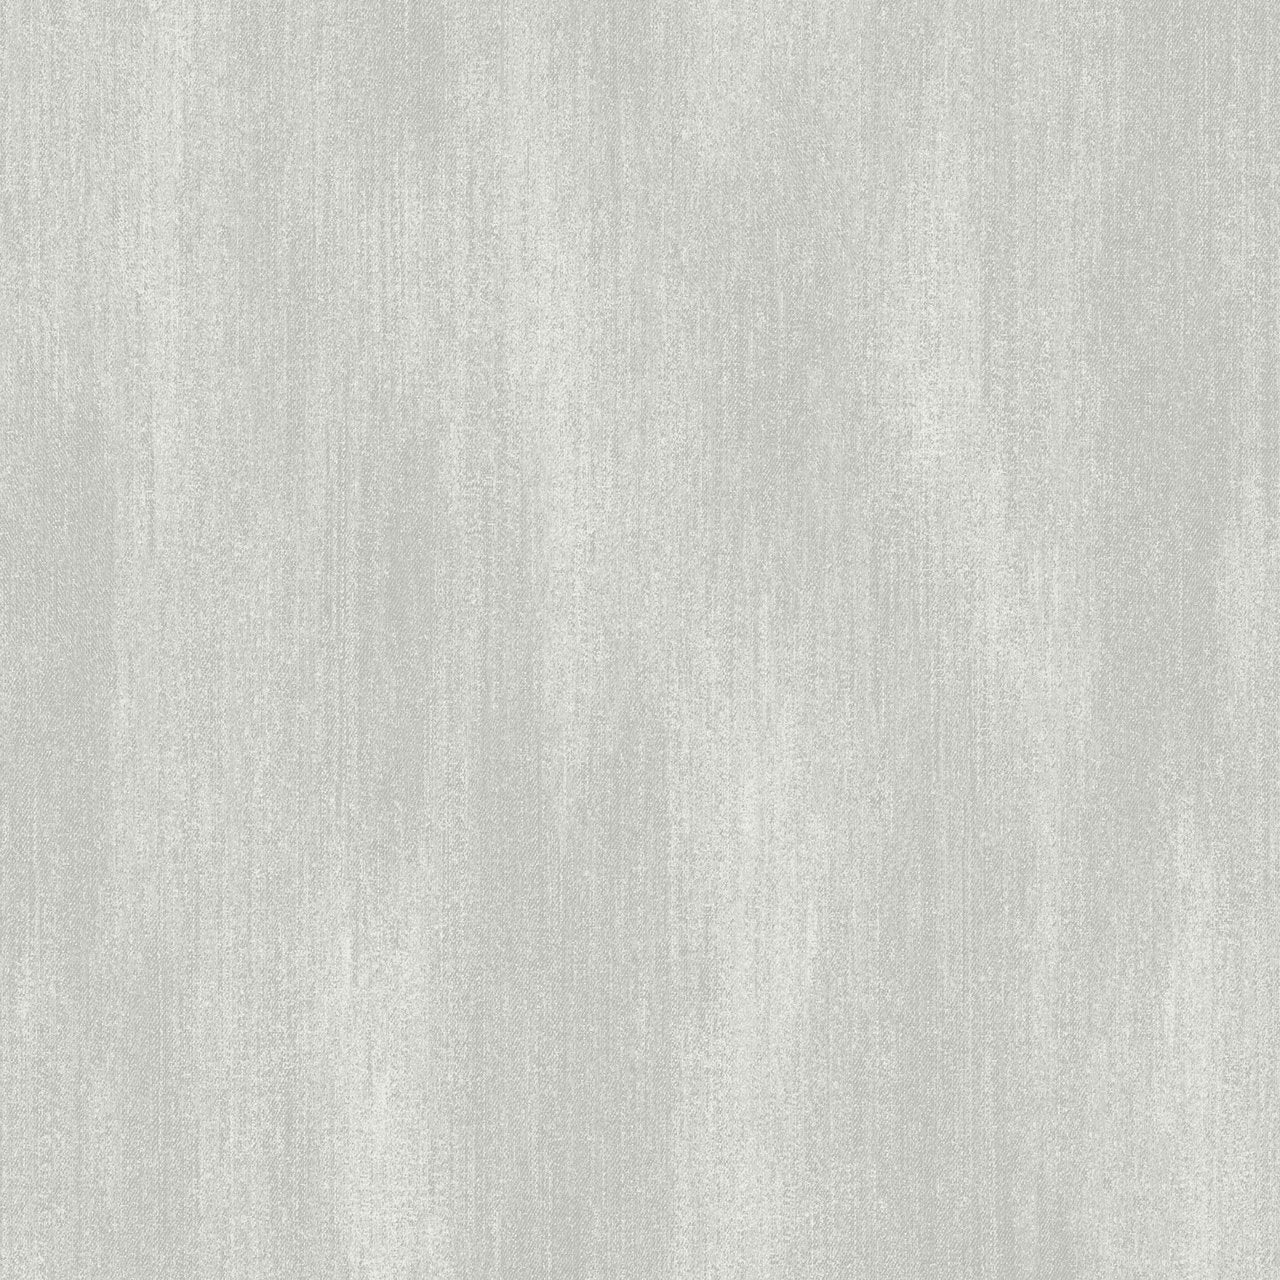 Fabric Texture Silver Grey Wallpaper